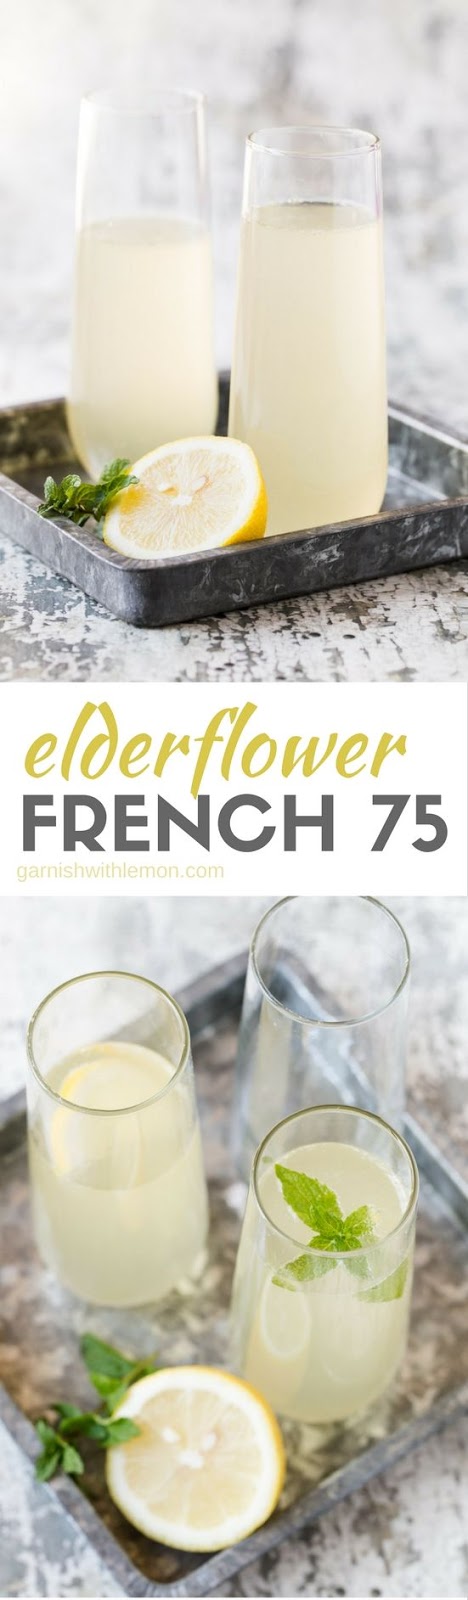 Elderflower French 75